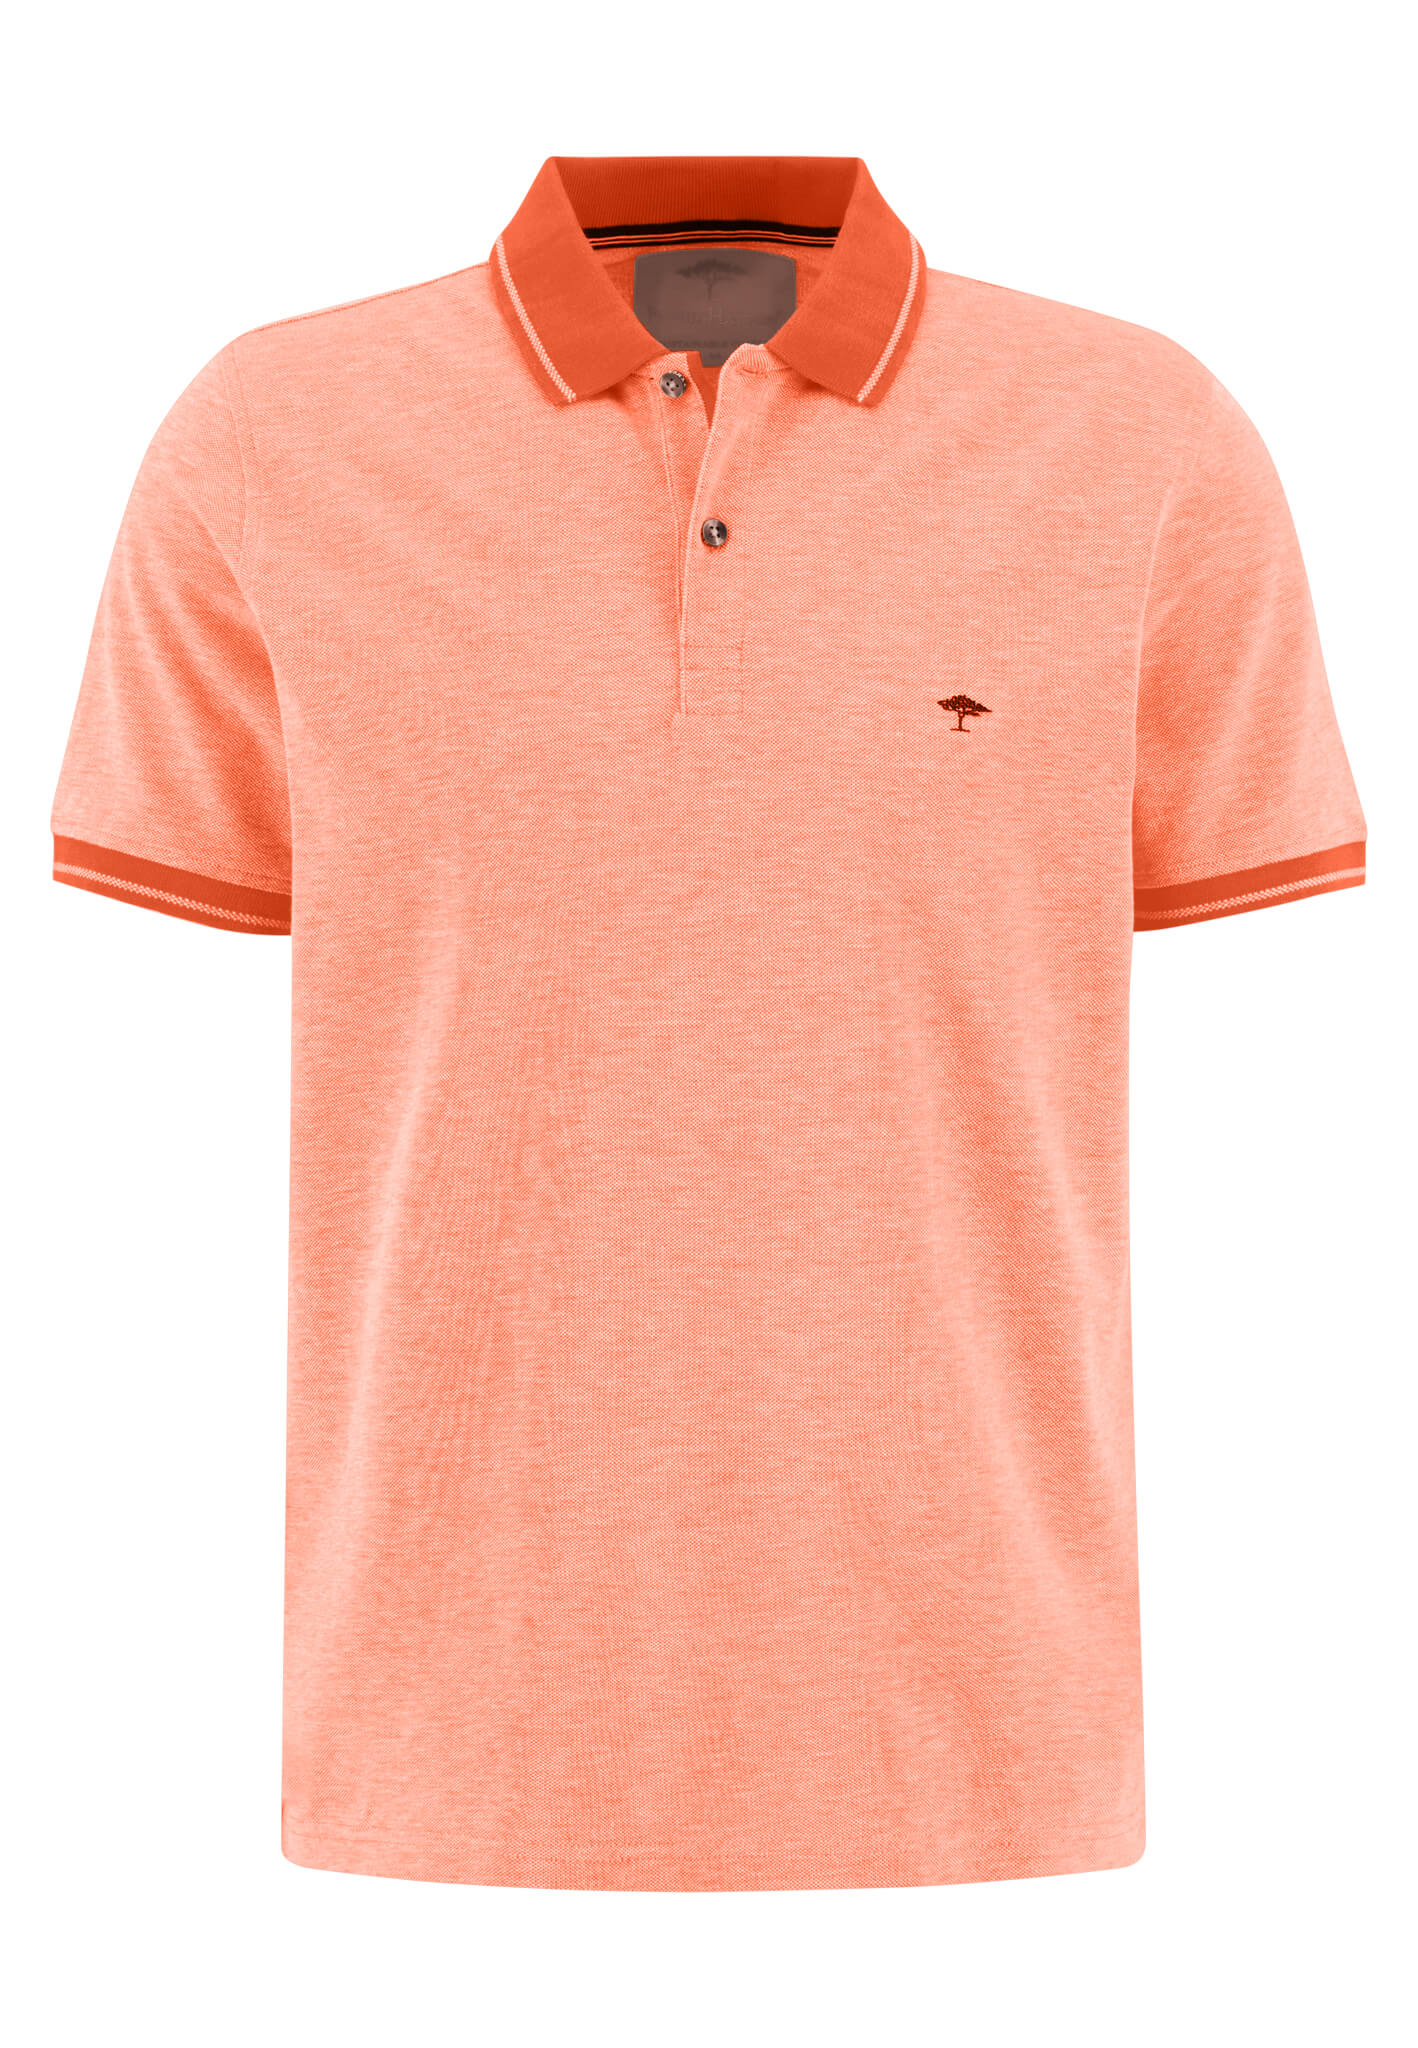 Fynch-Hatton Poloshirt Two-Tone L orange